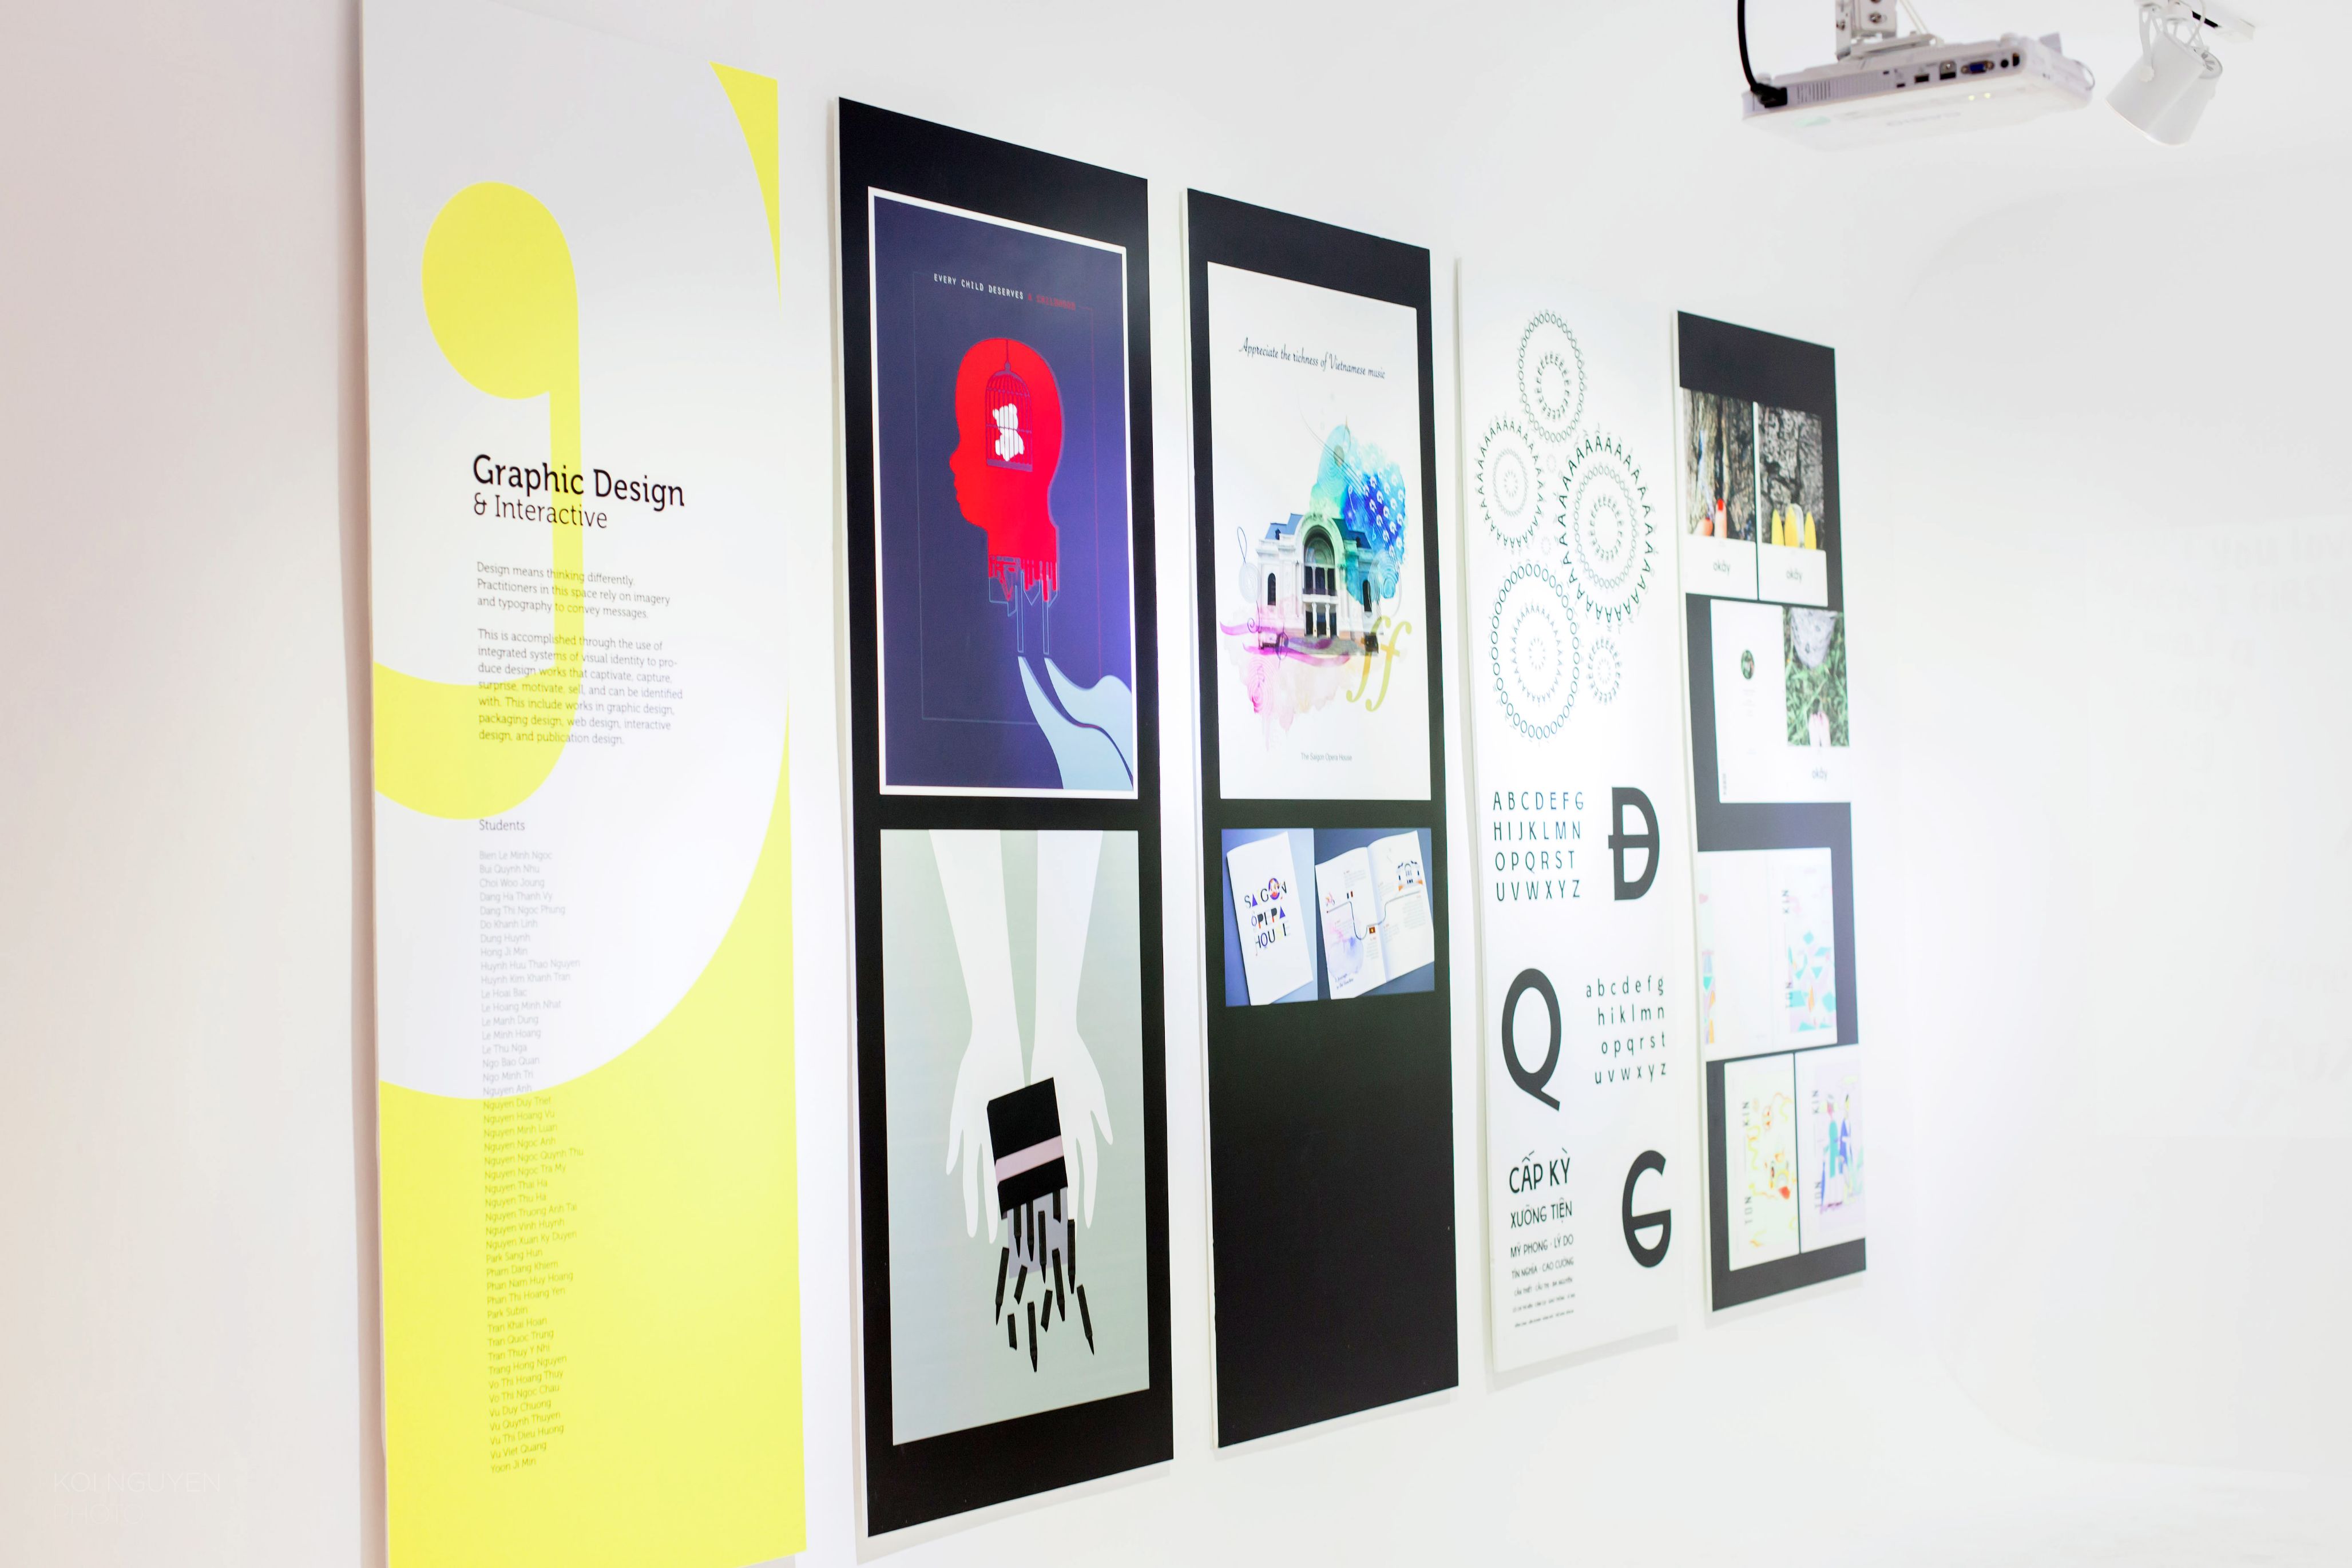 Exhibition on graphic design